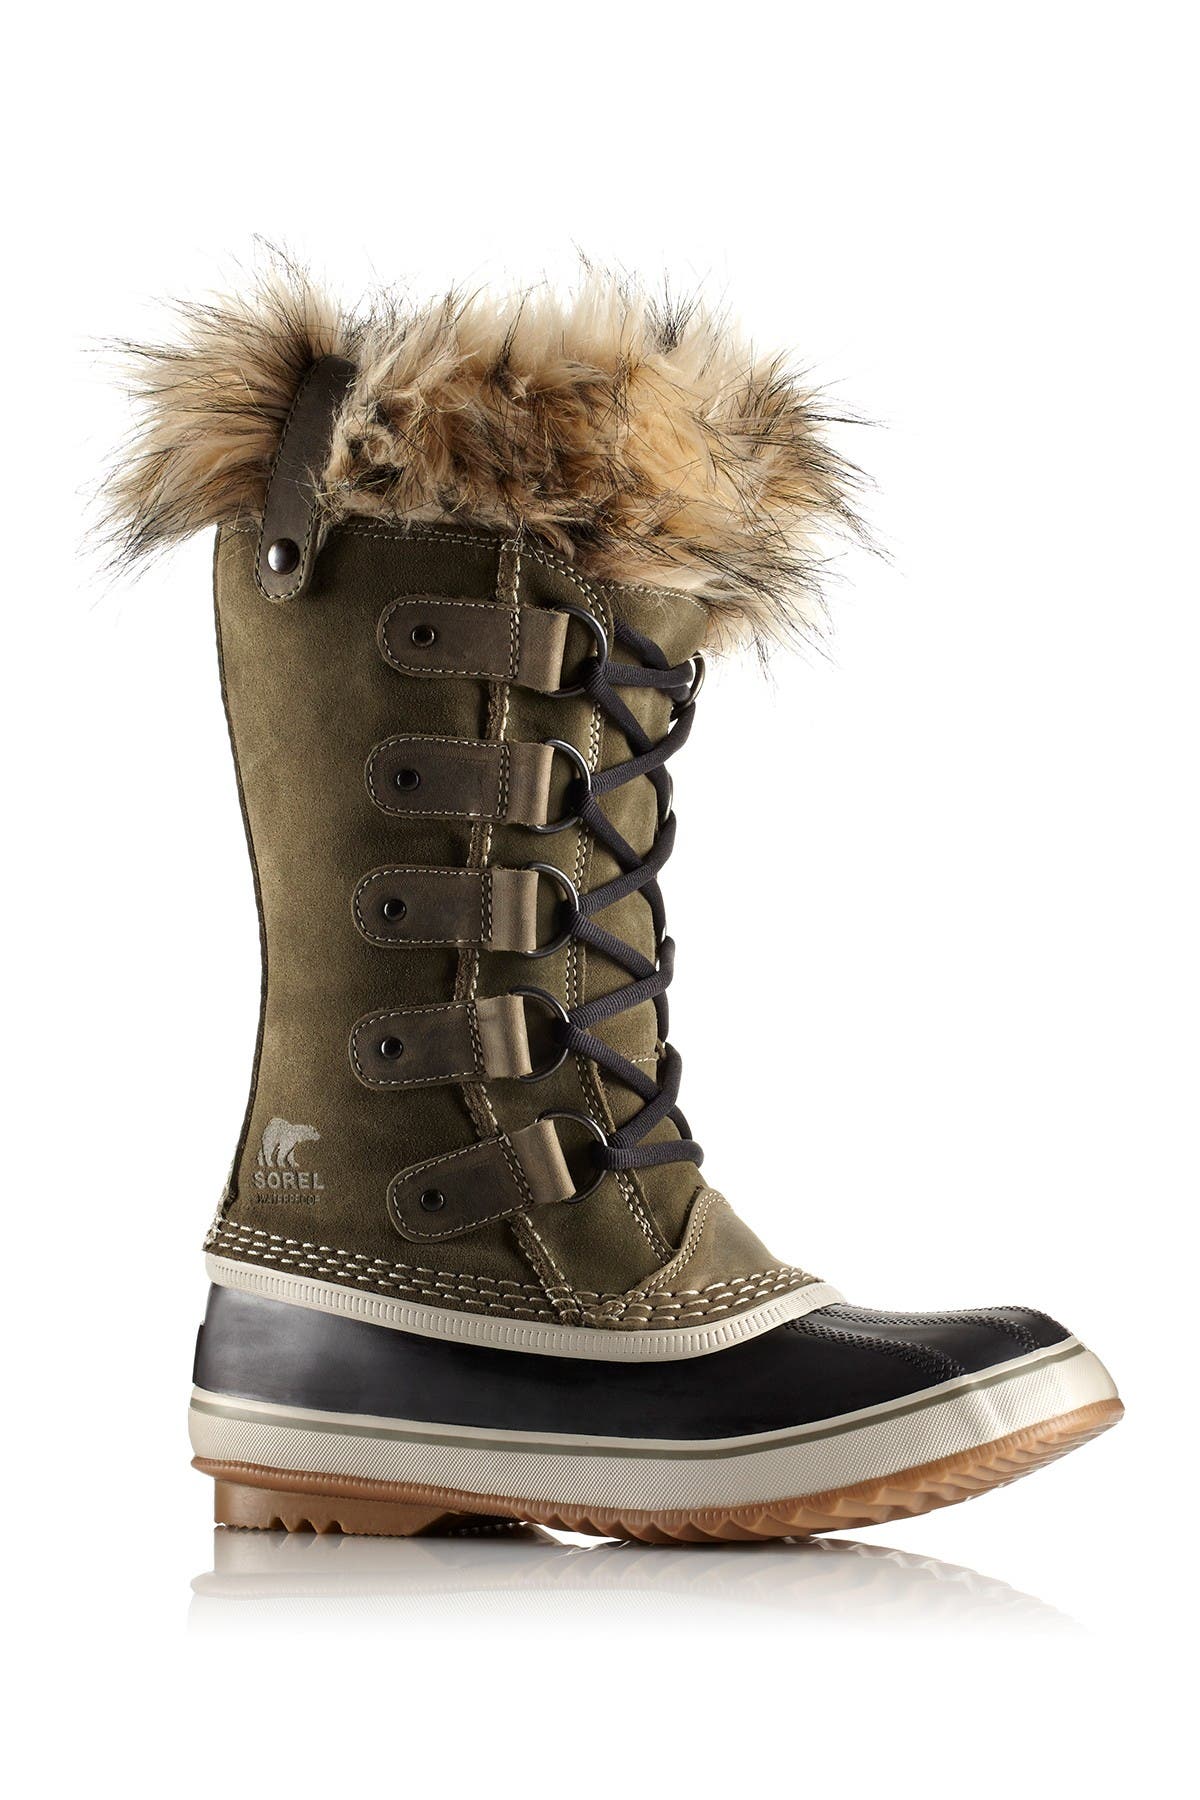 toms alpine boots